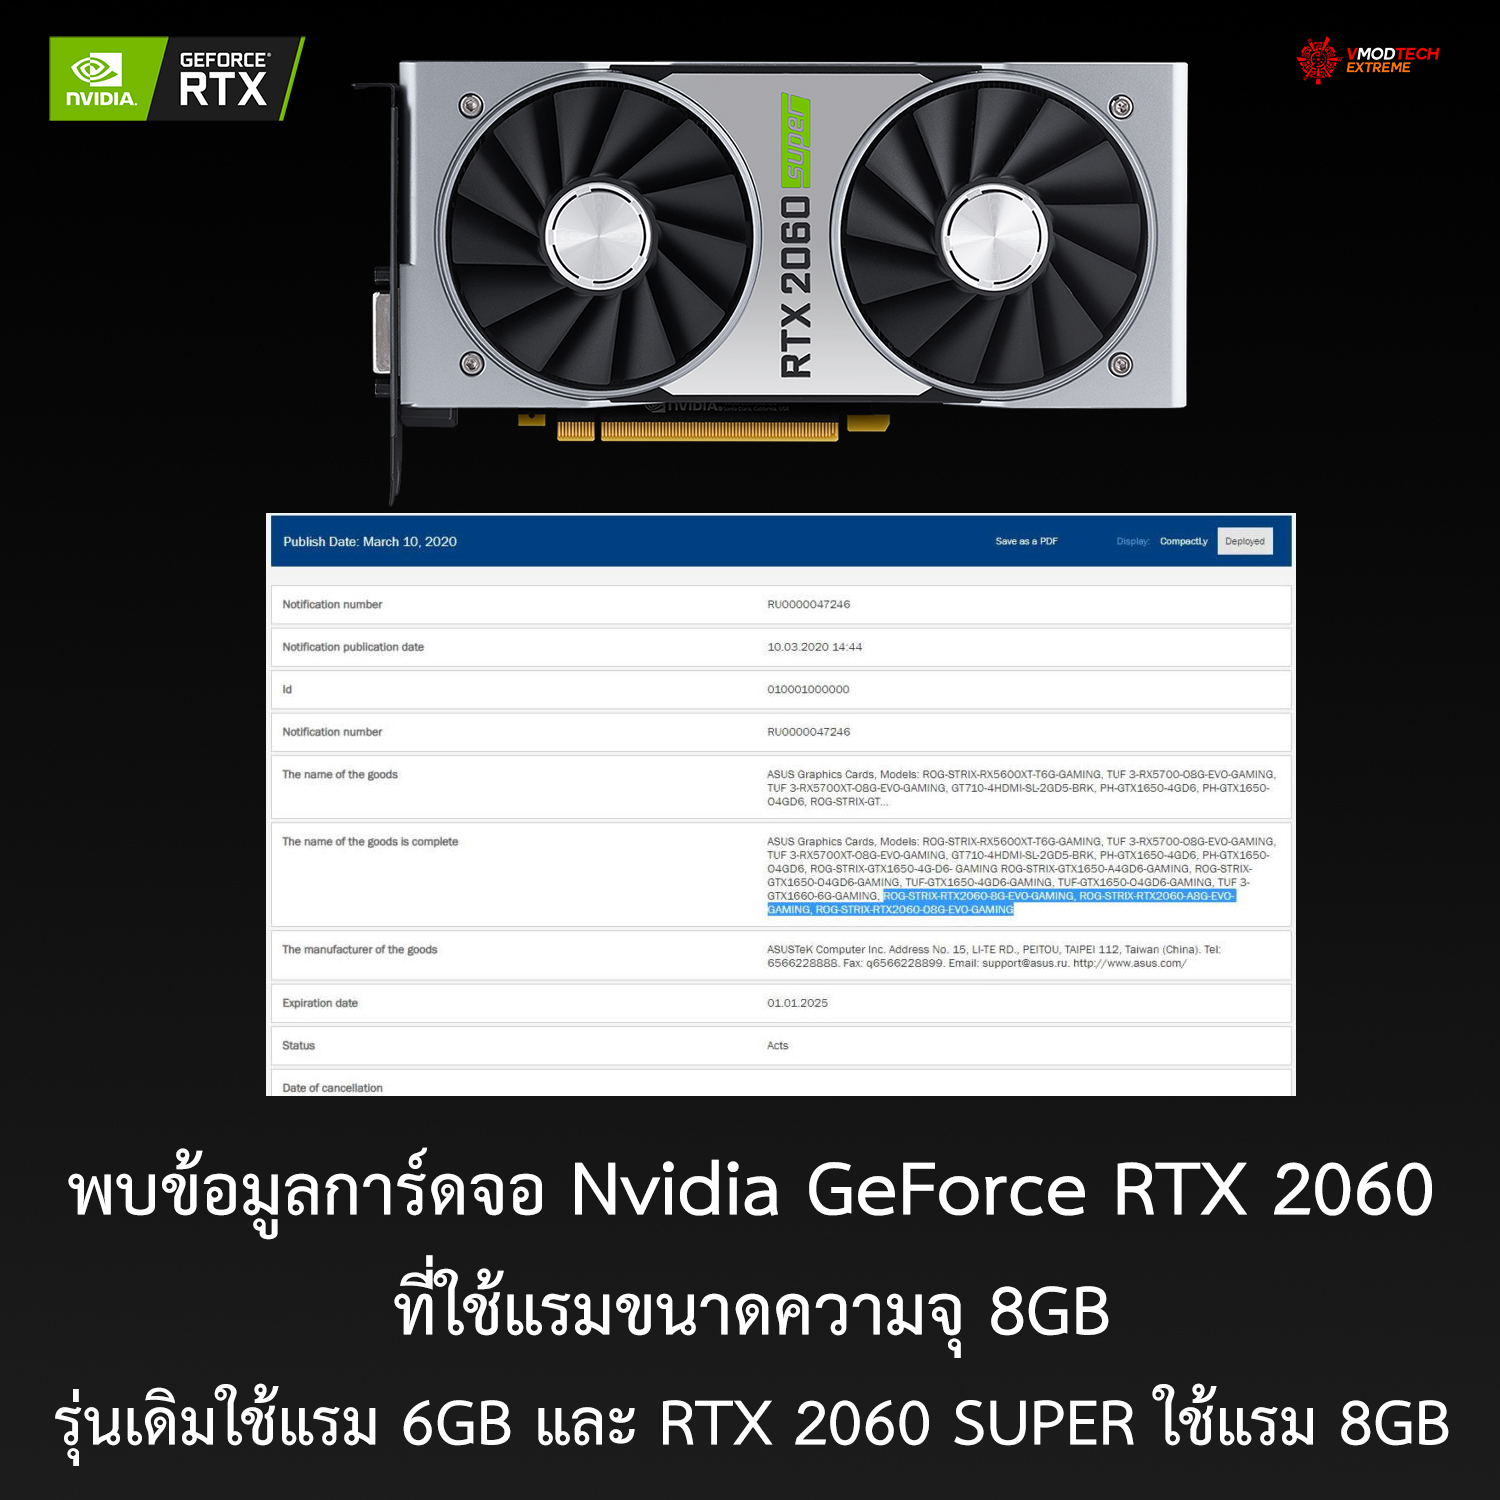 nvidia geforce rtx 2060 8gb พบข้อมูลการ์ดจอ Nvidia GeForce RTX 2060 ที่ใช้แรมขนาดความจุ 8GB 